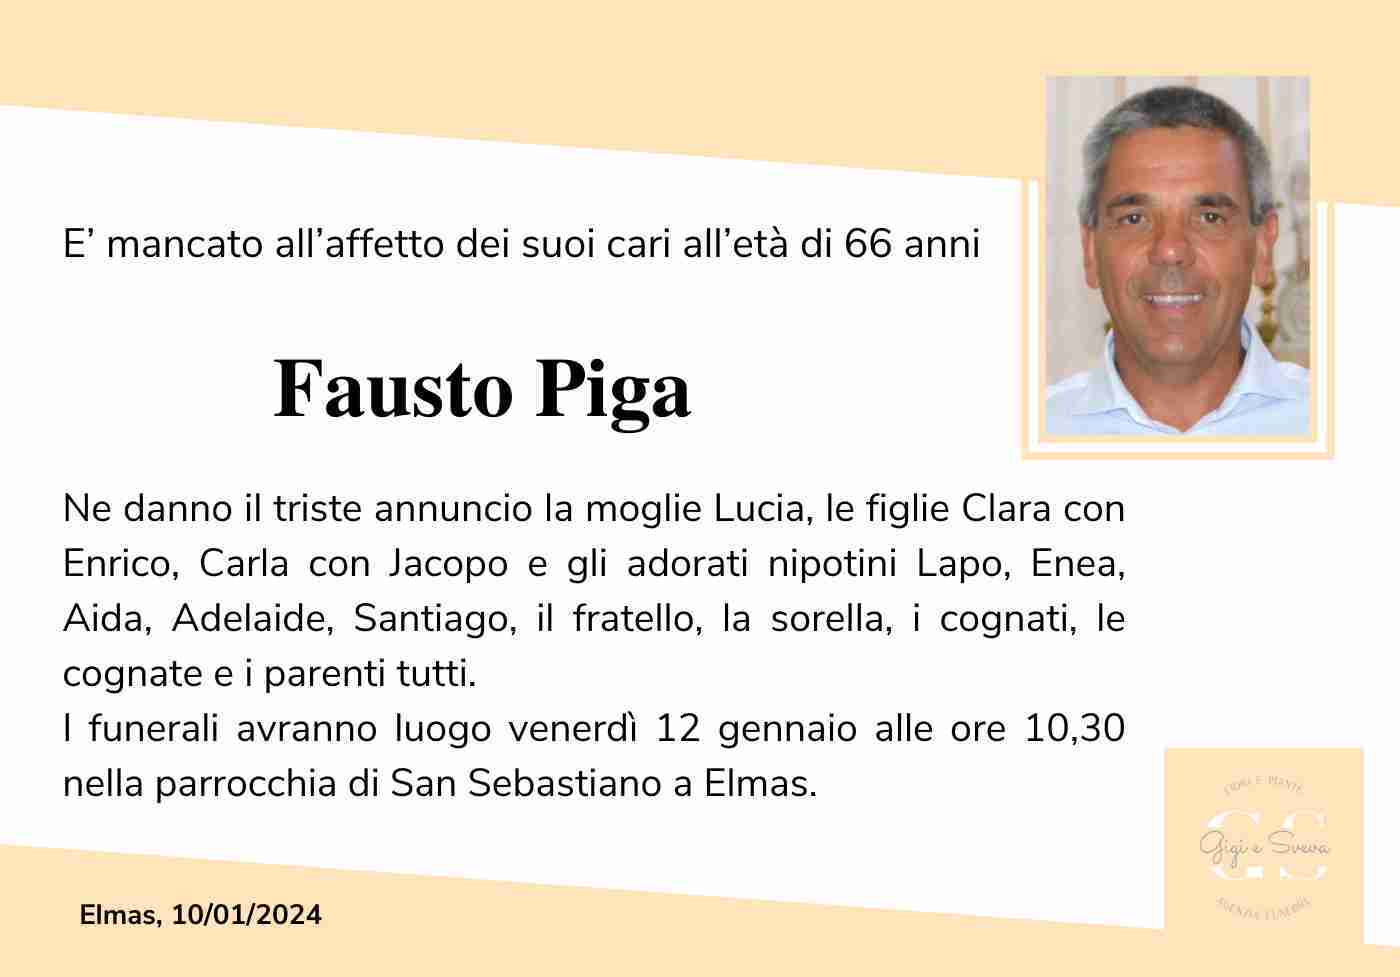 Fausto Piga